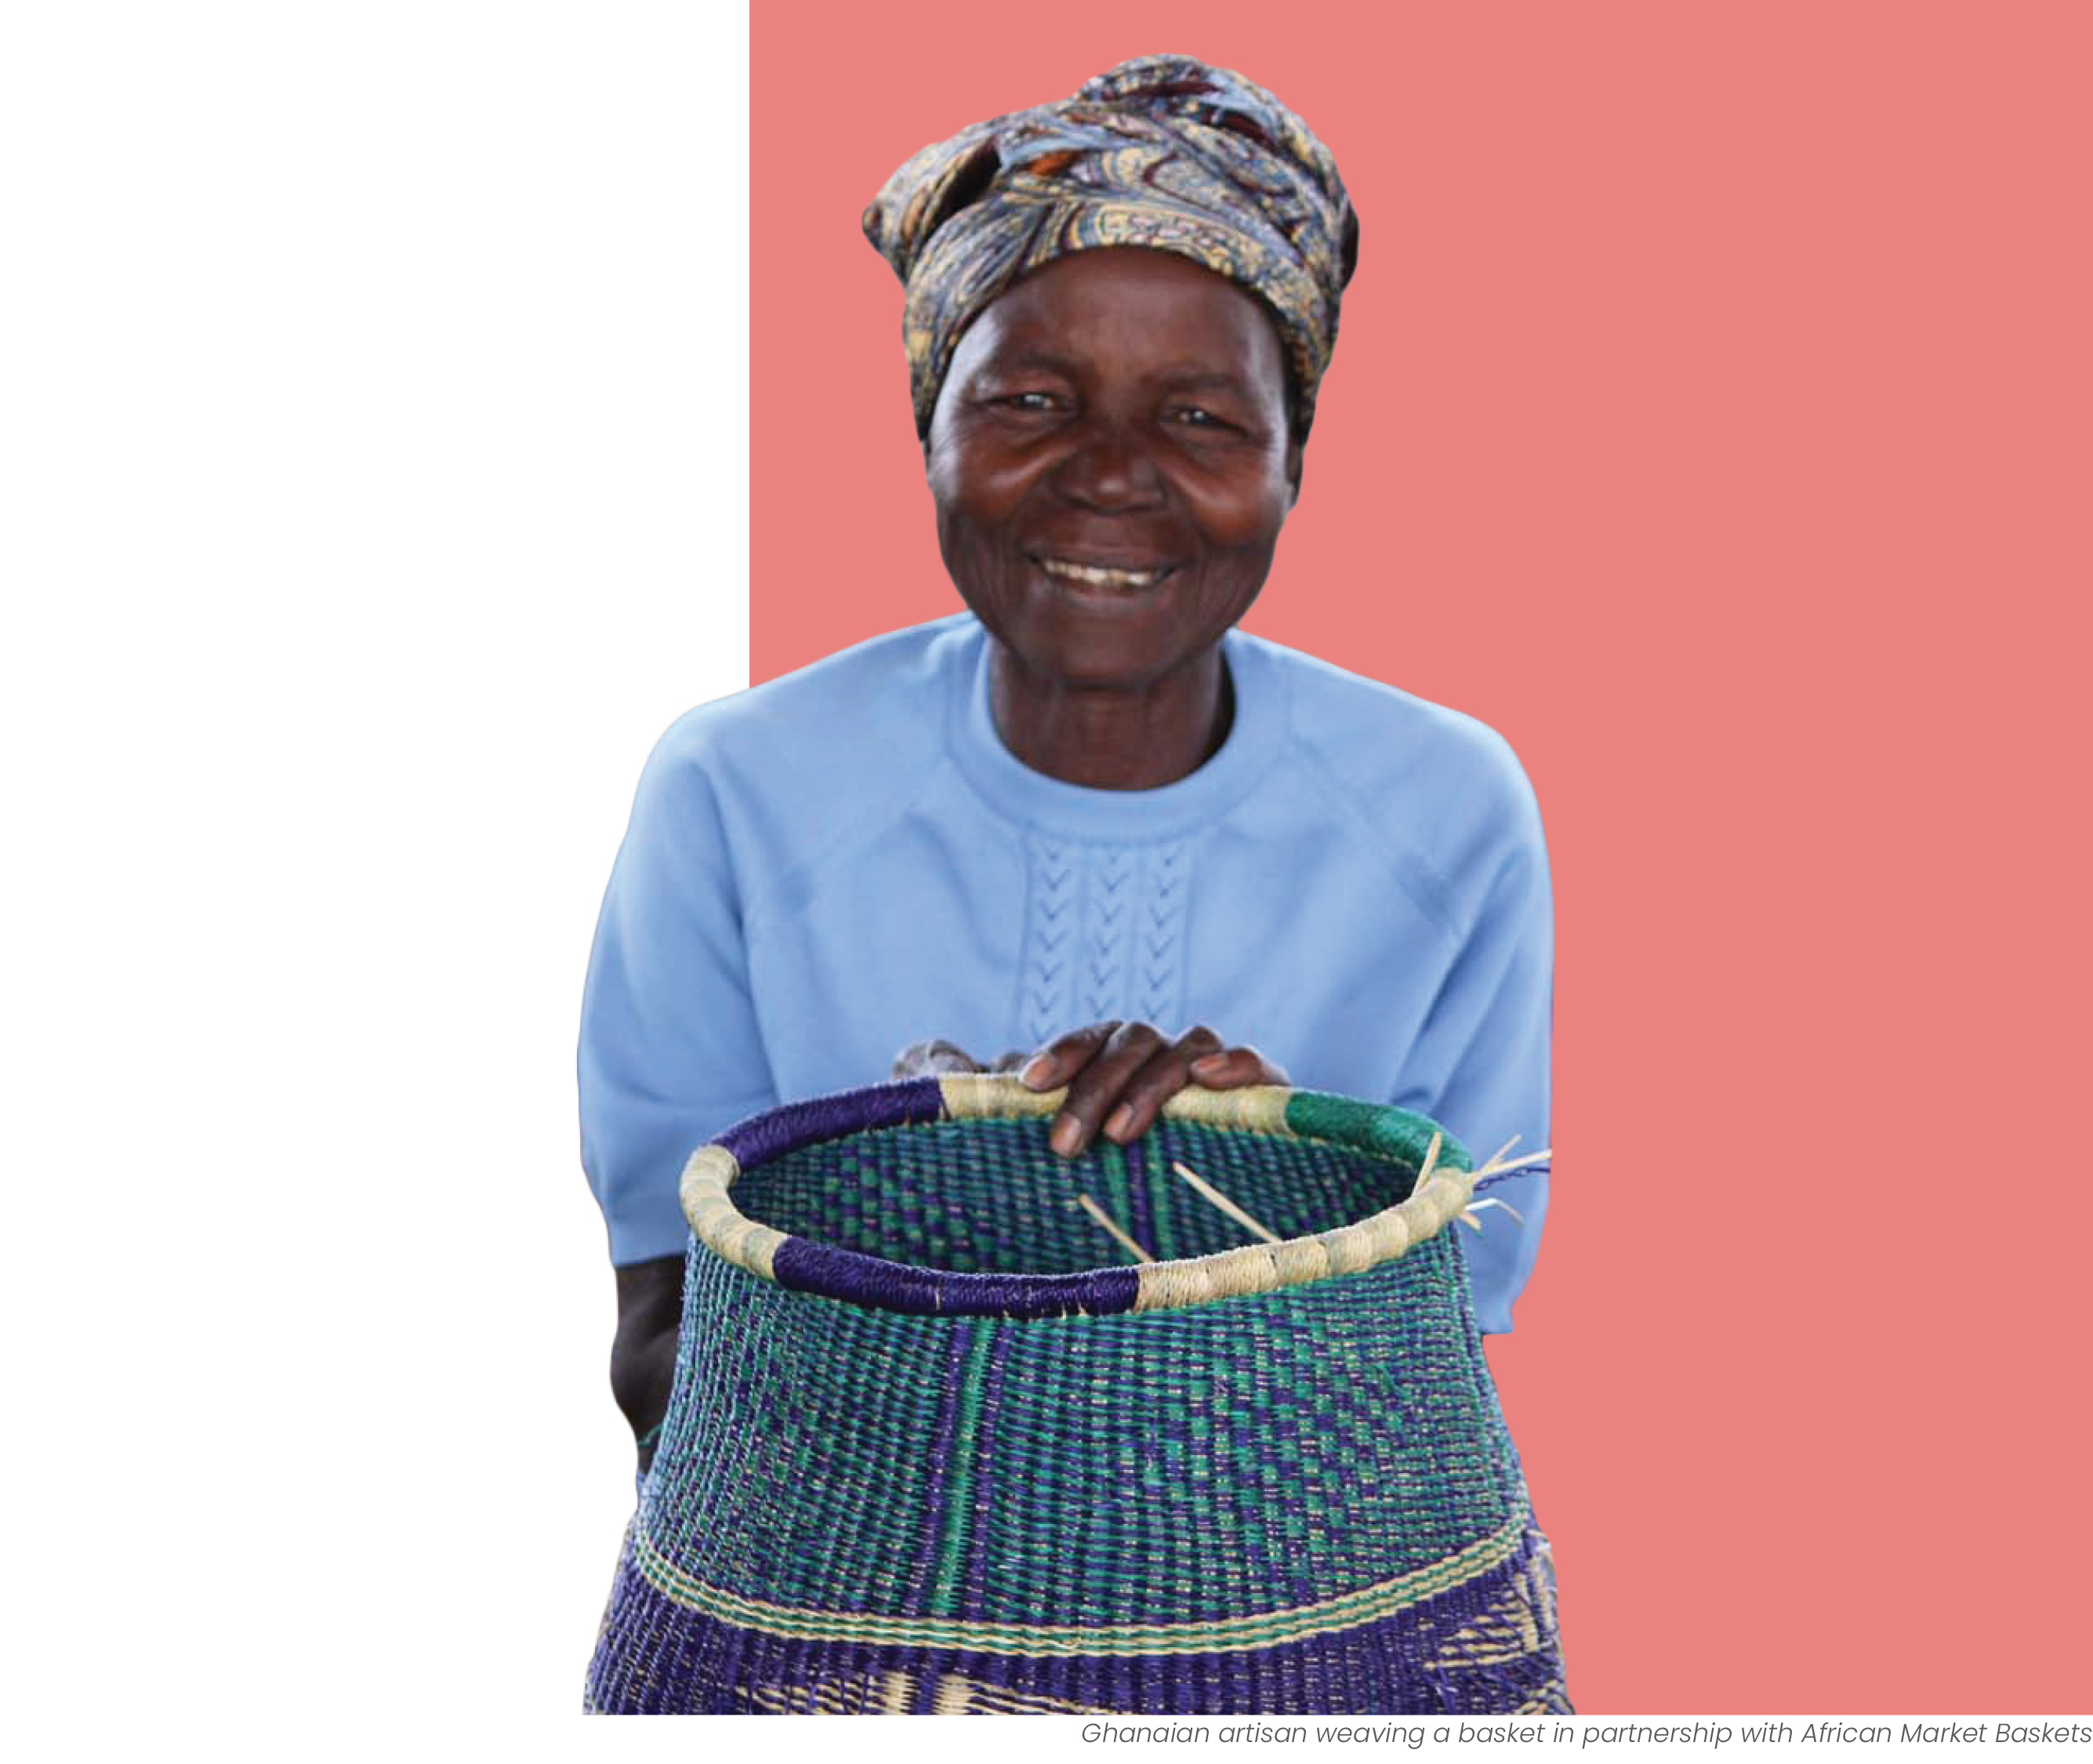 Ghanaian artisan weaving a basket in partnership with African Market Baskets